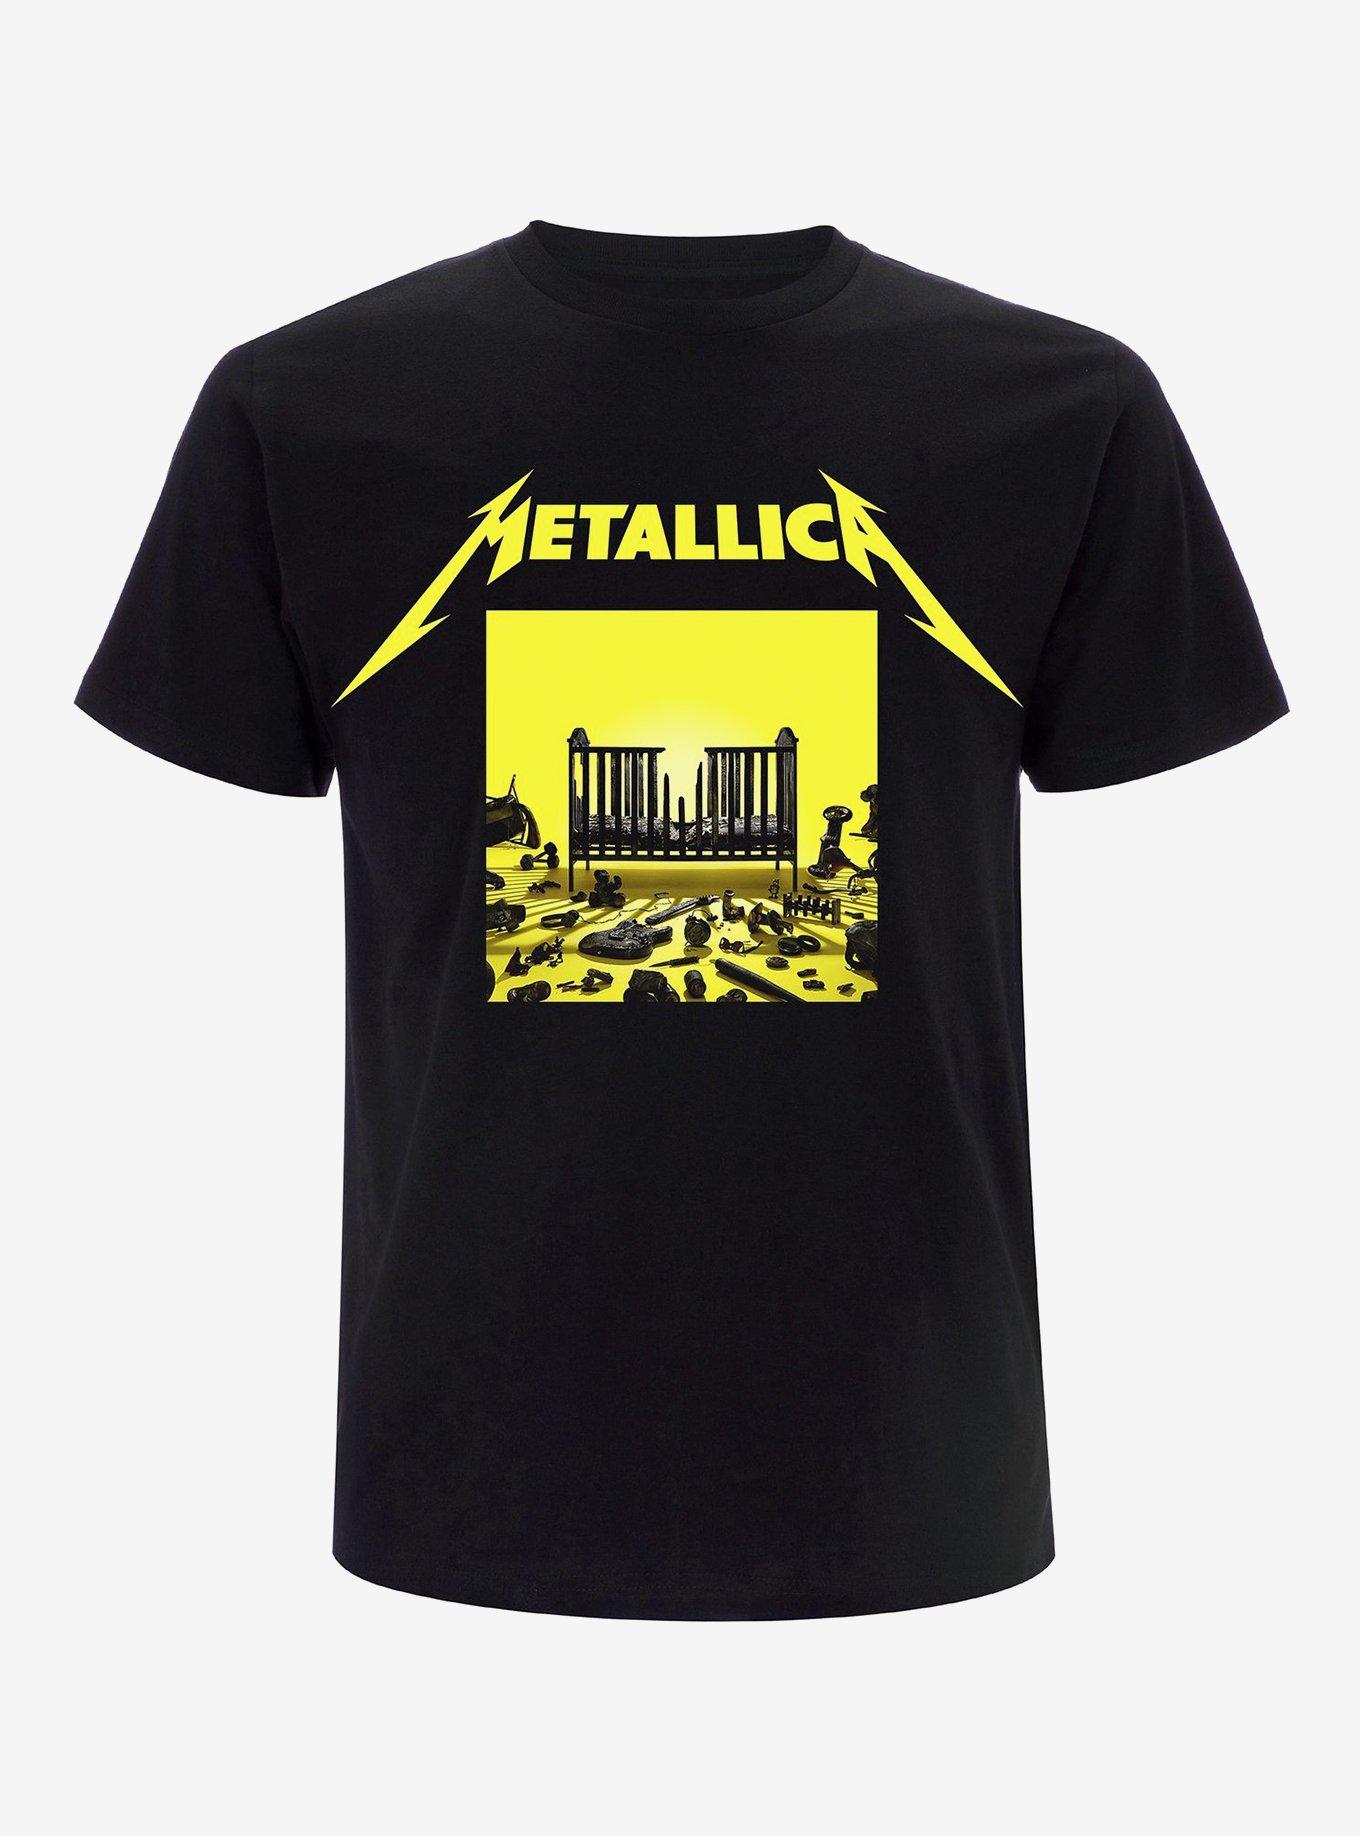 Metallica 72 Seasons Track List T-Shirt